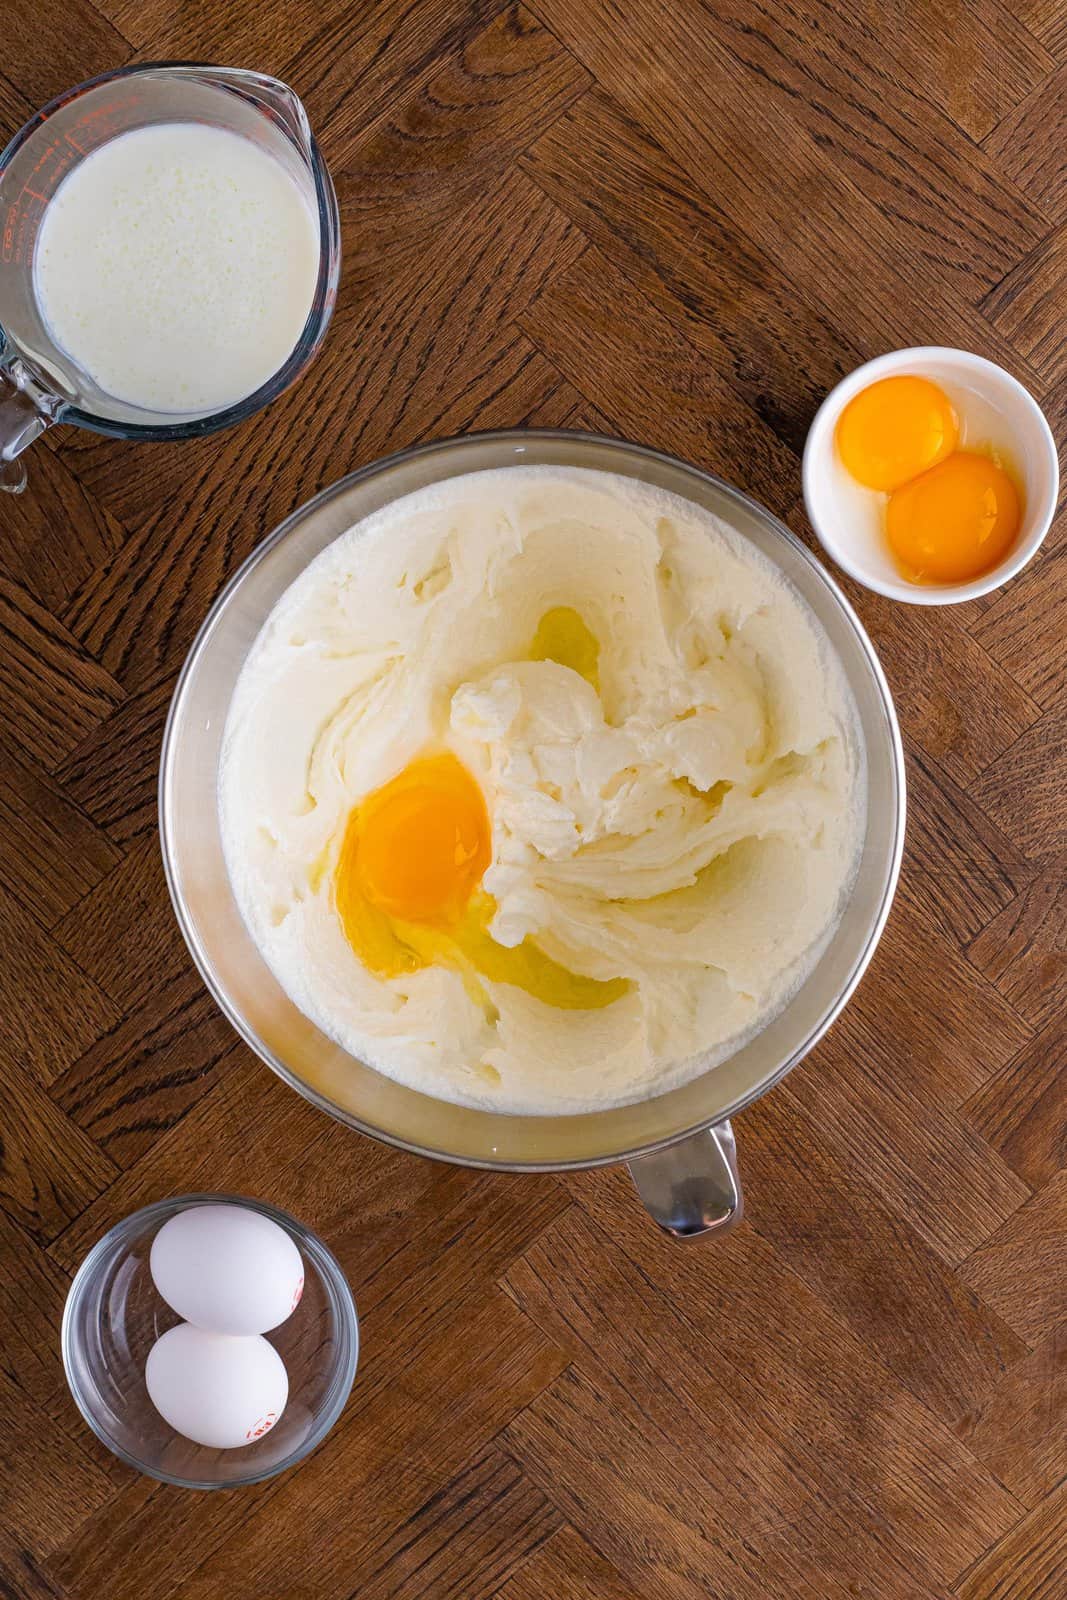 Egg yolks in a cake batter mixture. 